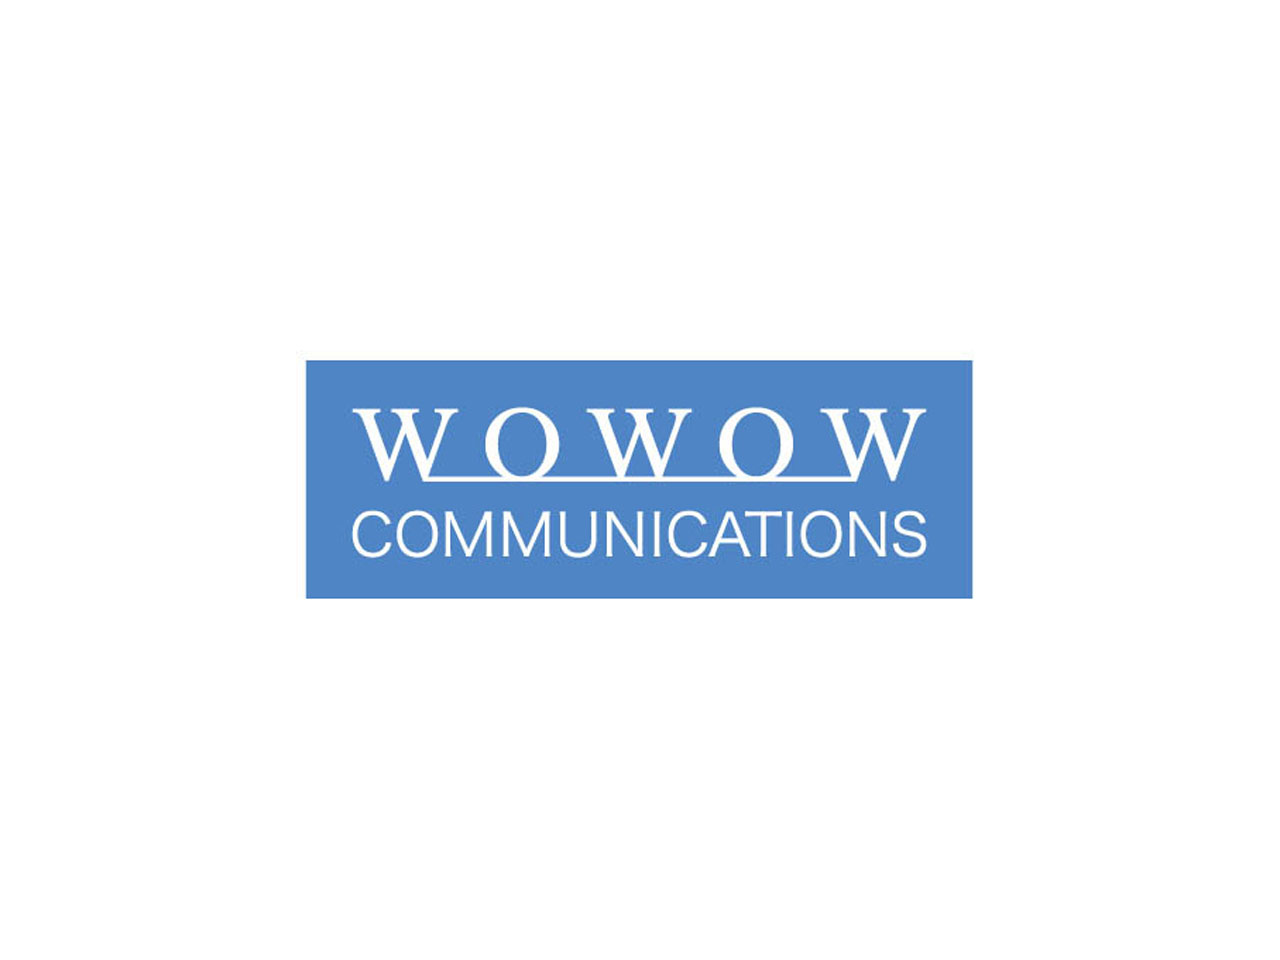 BS放送サービス事業者である株式会社WOWOWのグループ企業として1998年に分社化され、コンタクトセンター運営やテレマーケティングサービスを提供する企業として設立された同社。